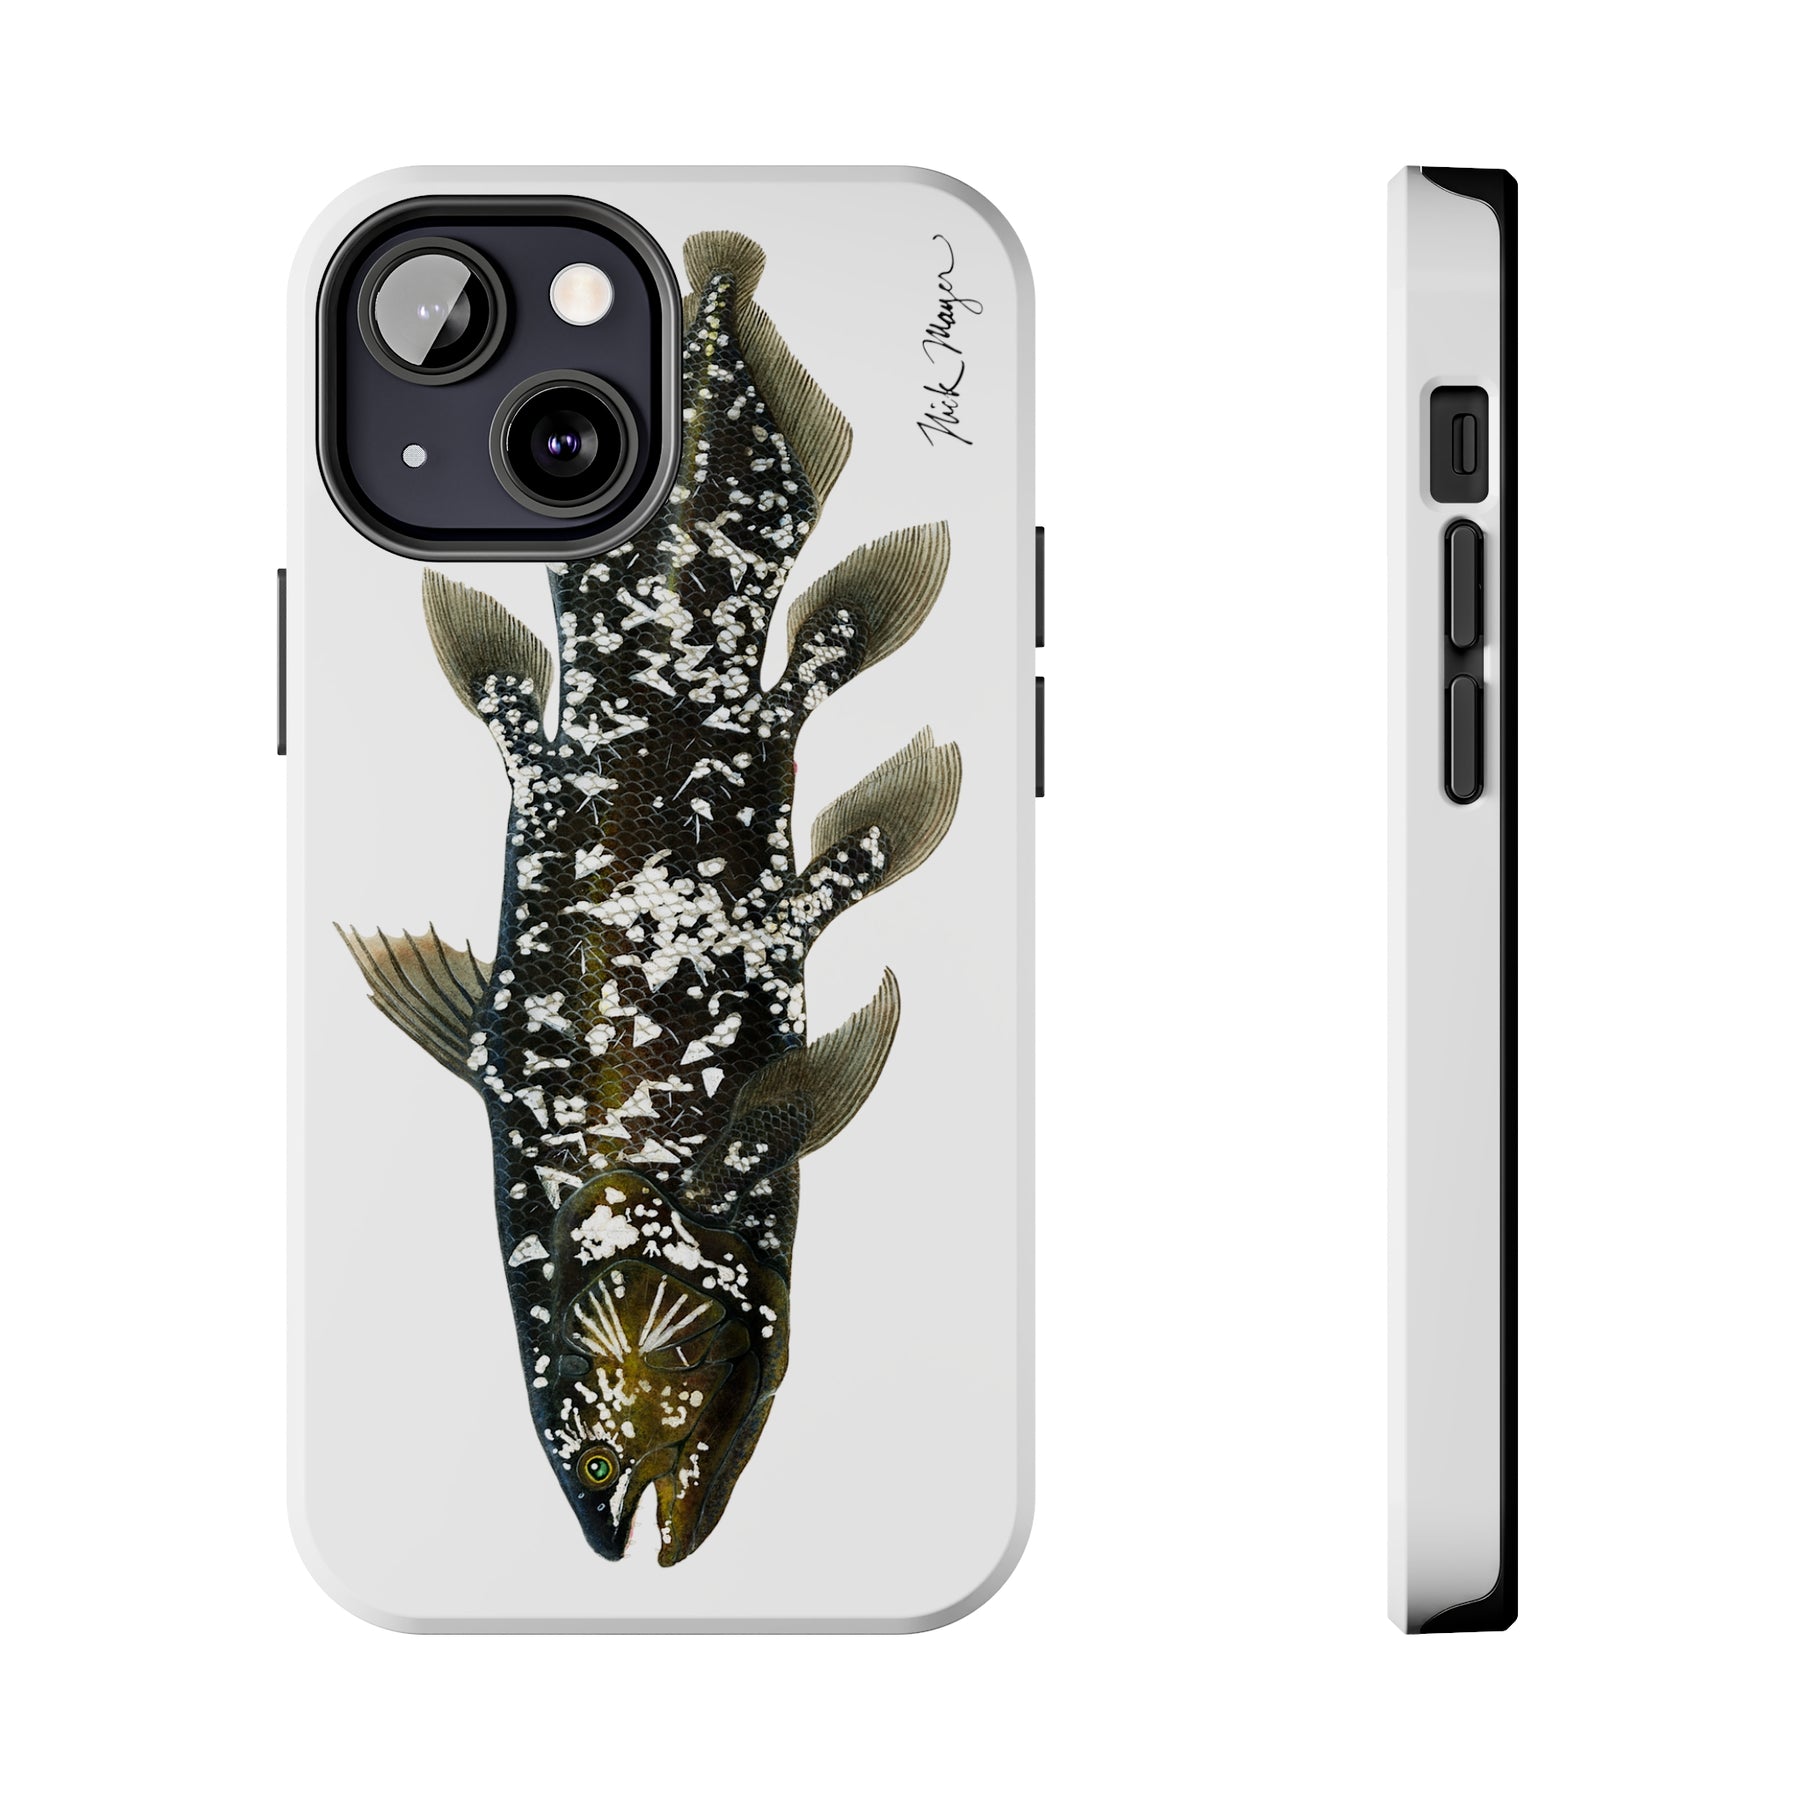 Coelacanth Phone Case (iPhone)